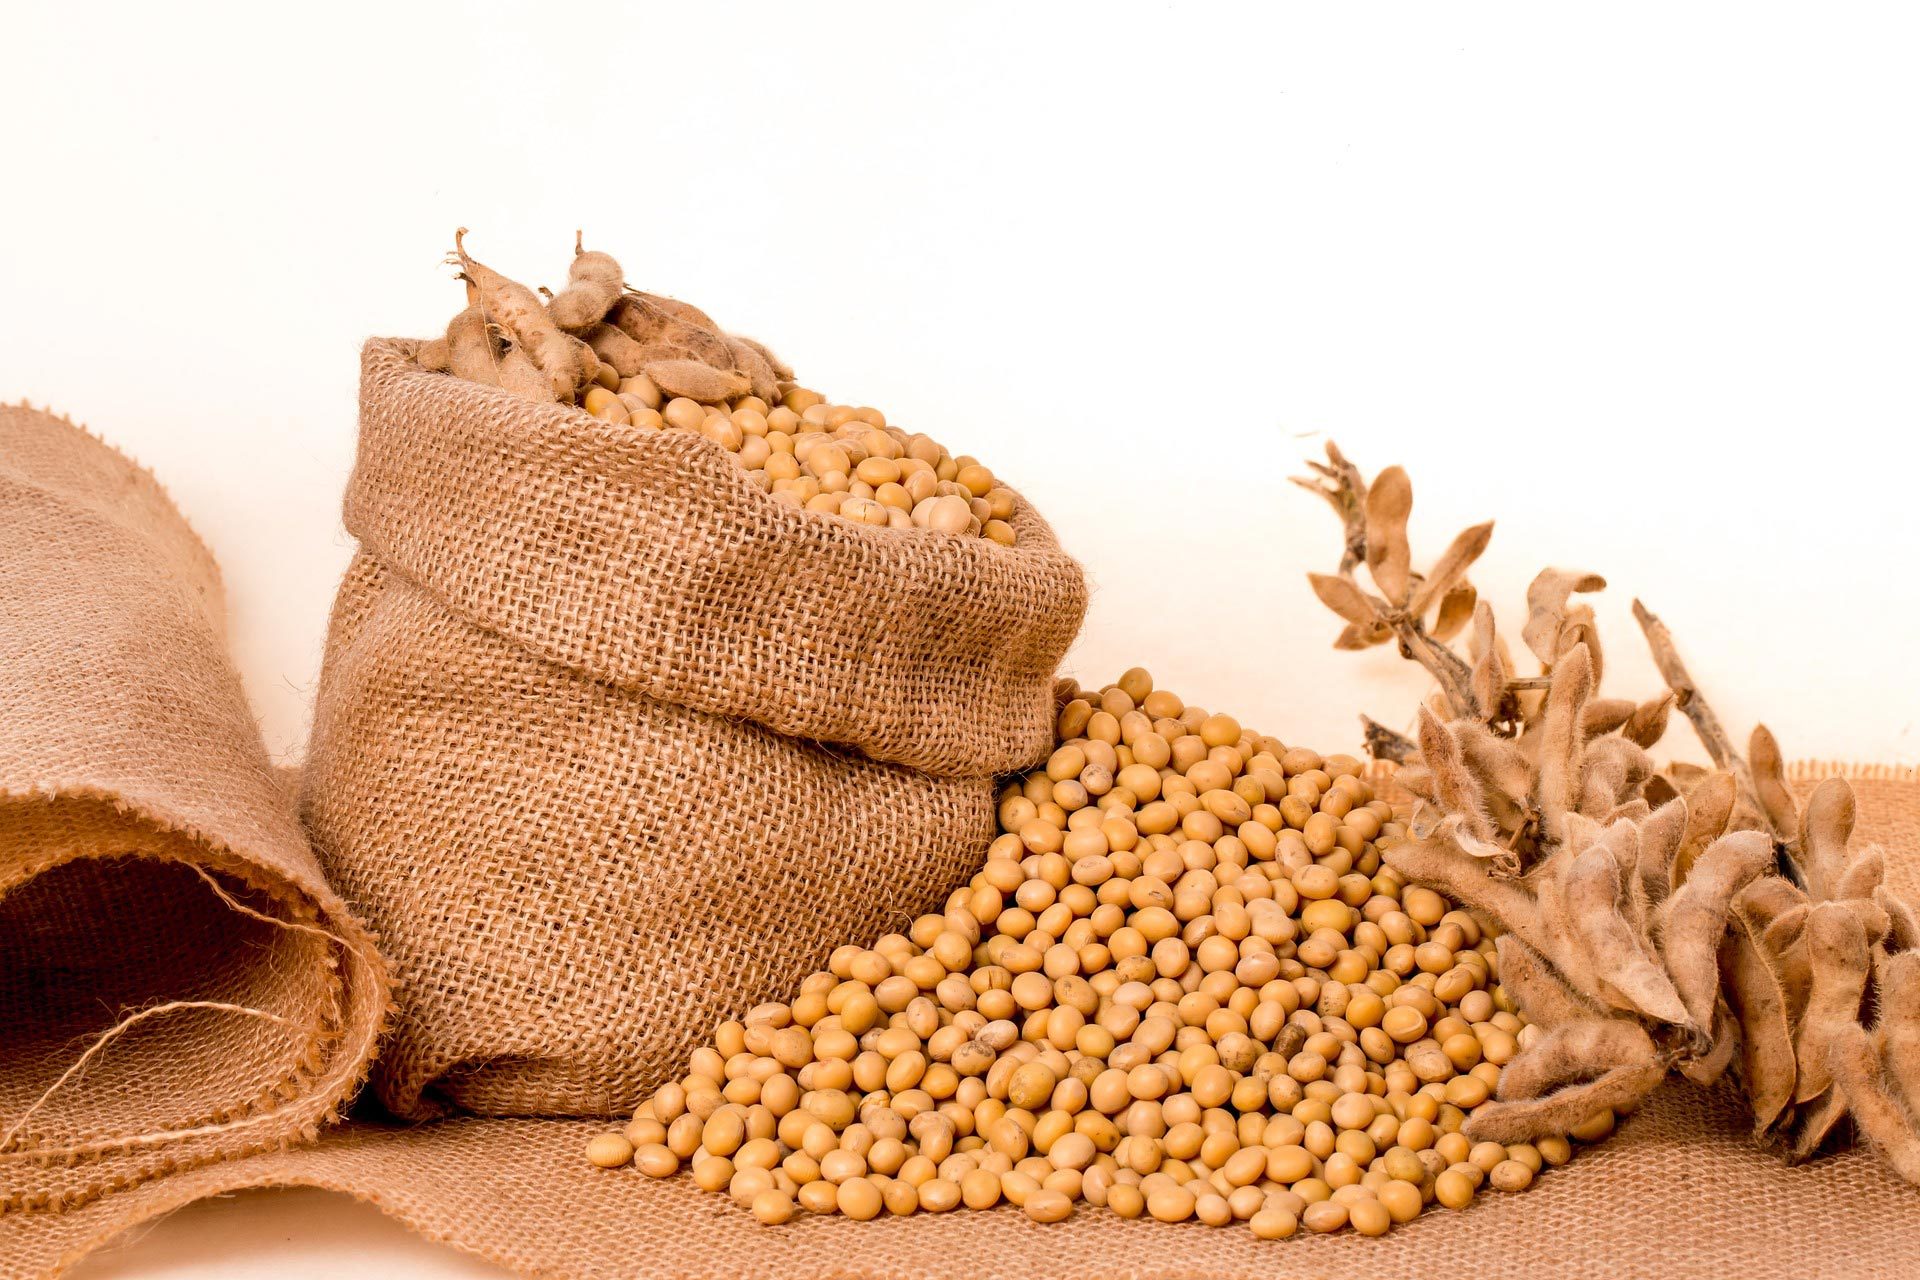 Soybeans / Grains